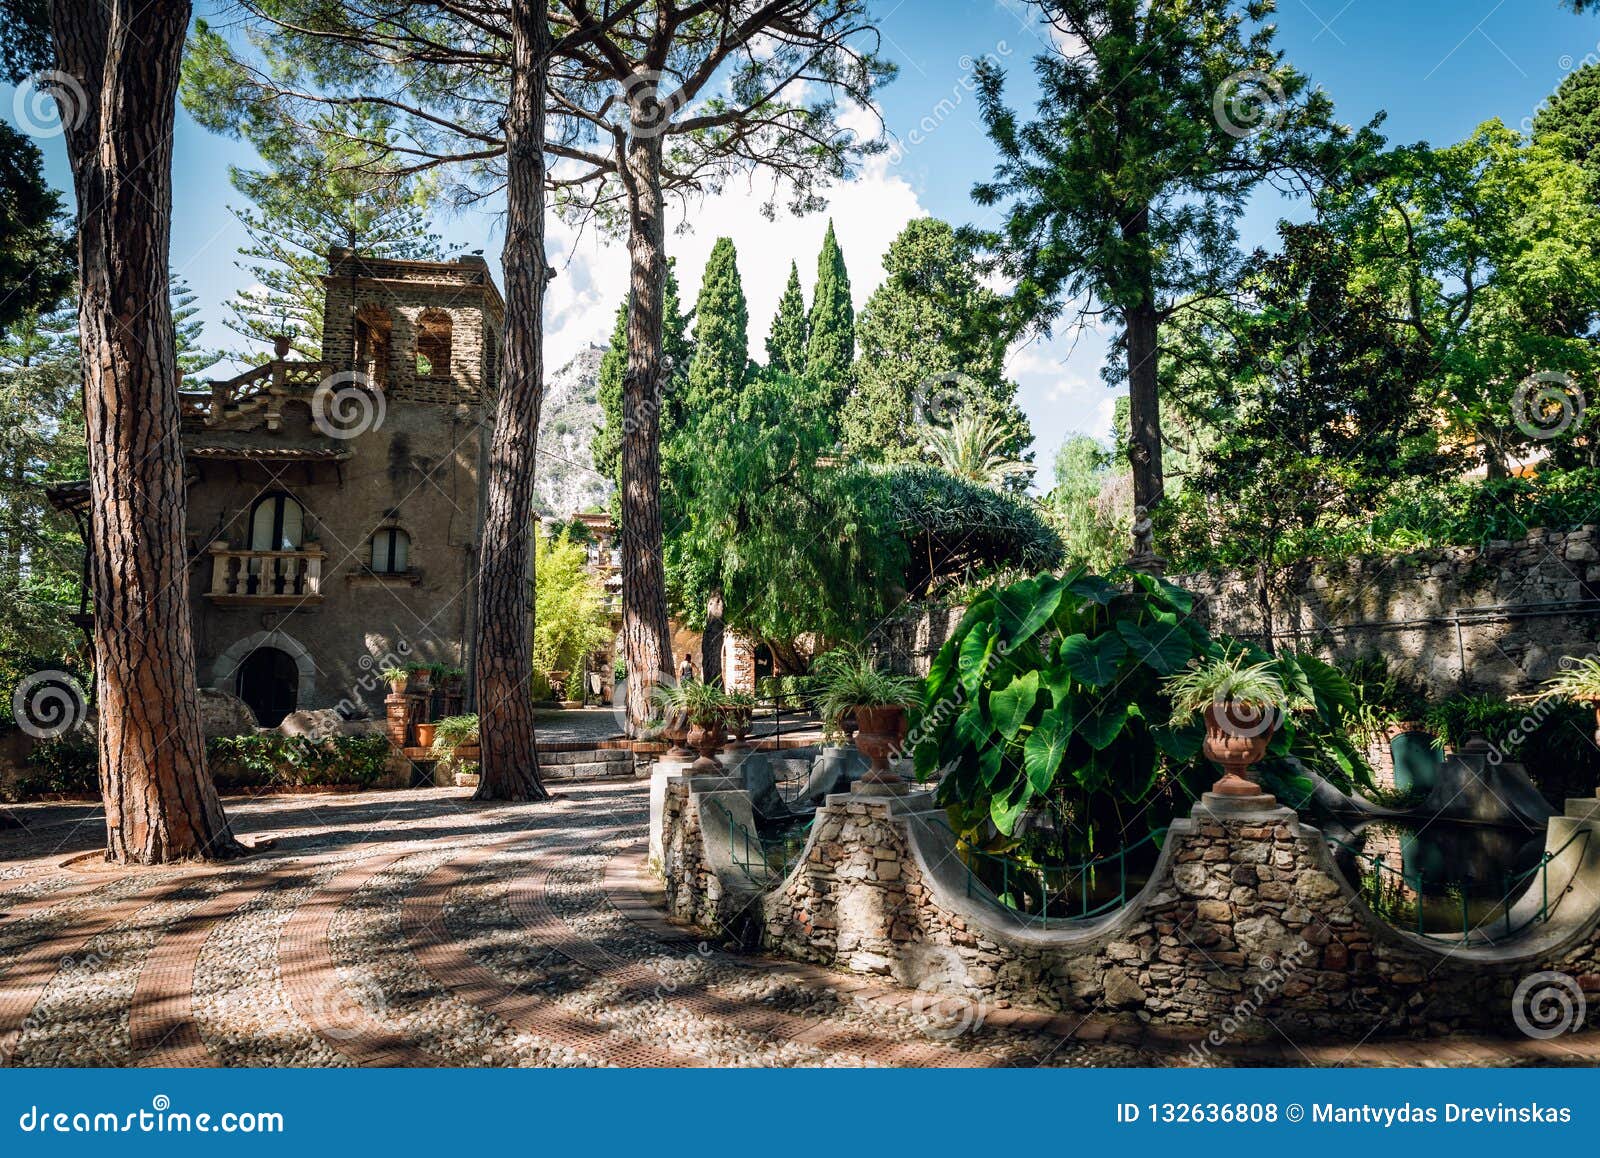 villa comunale di taormina. public garden of taormina city in sicily, italy